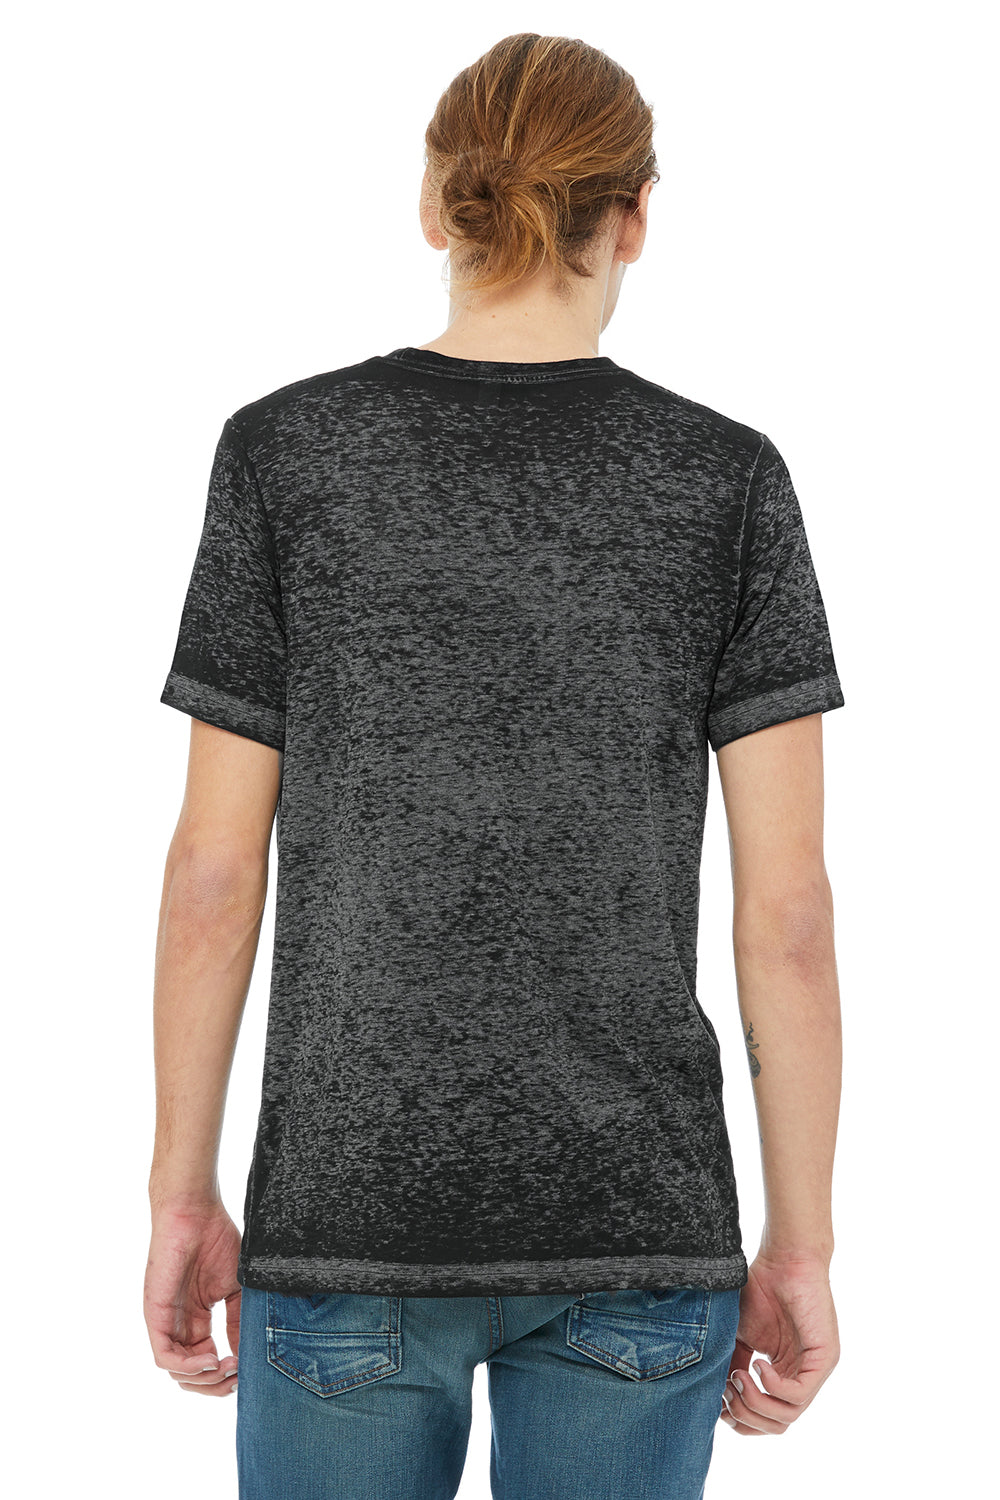 Bella + Canvas BC3650/3650 Mens Short Sleeve Crewneck T-Shirt Black Acid Washed Model Back